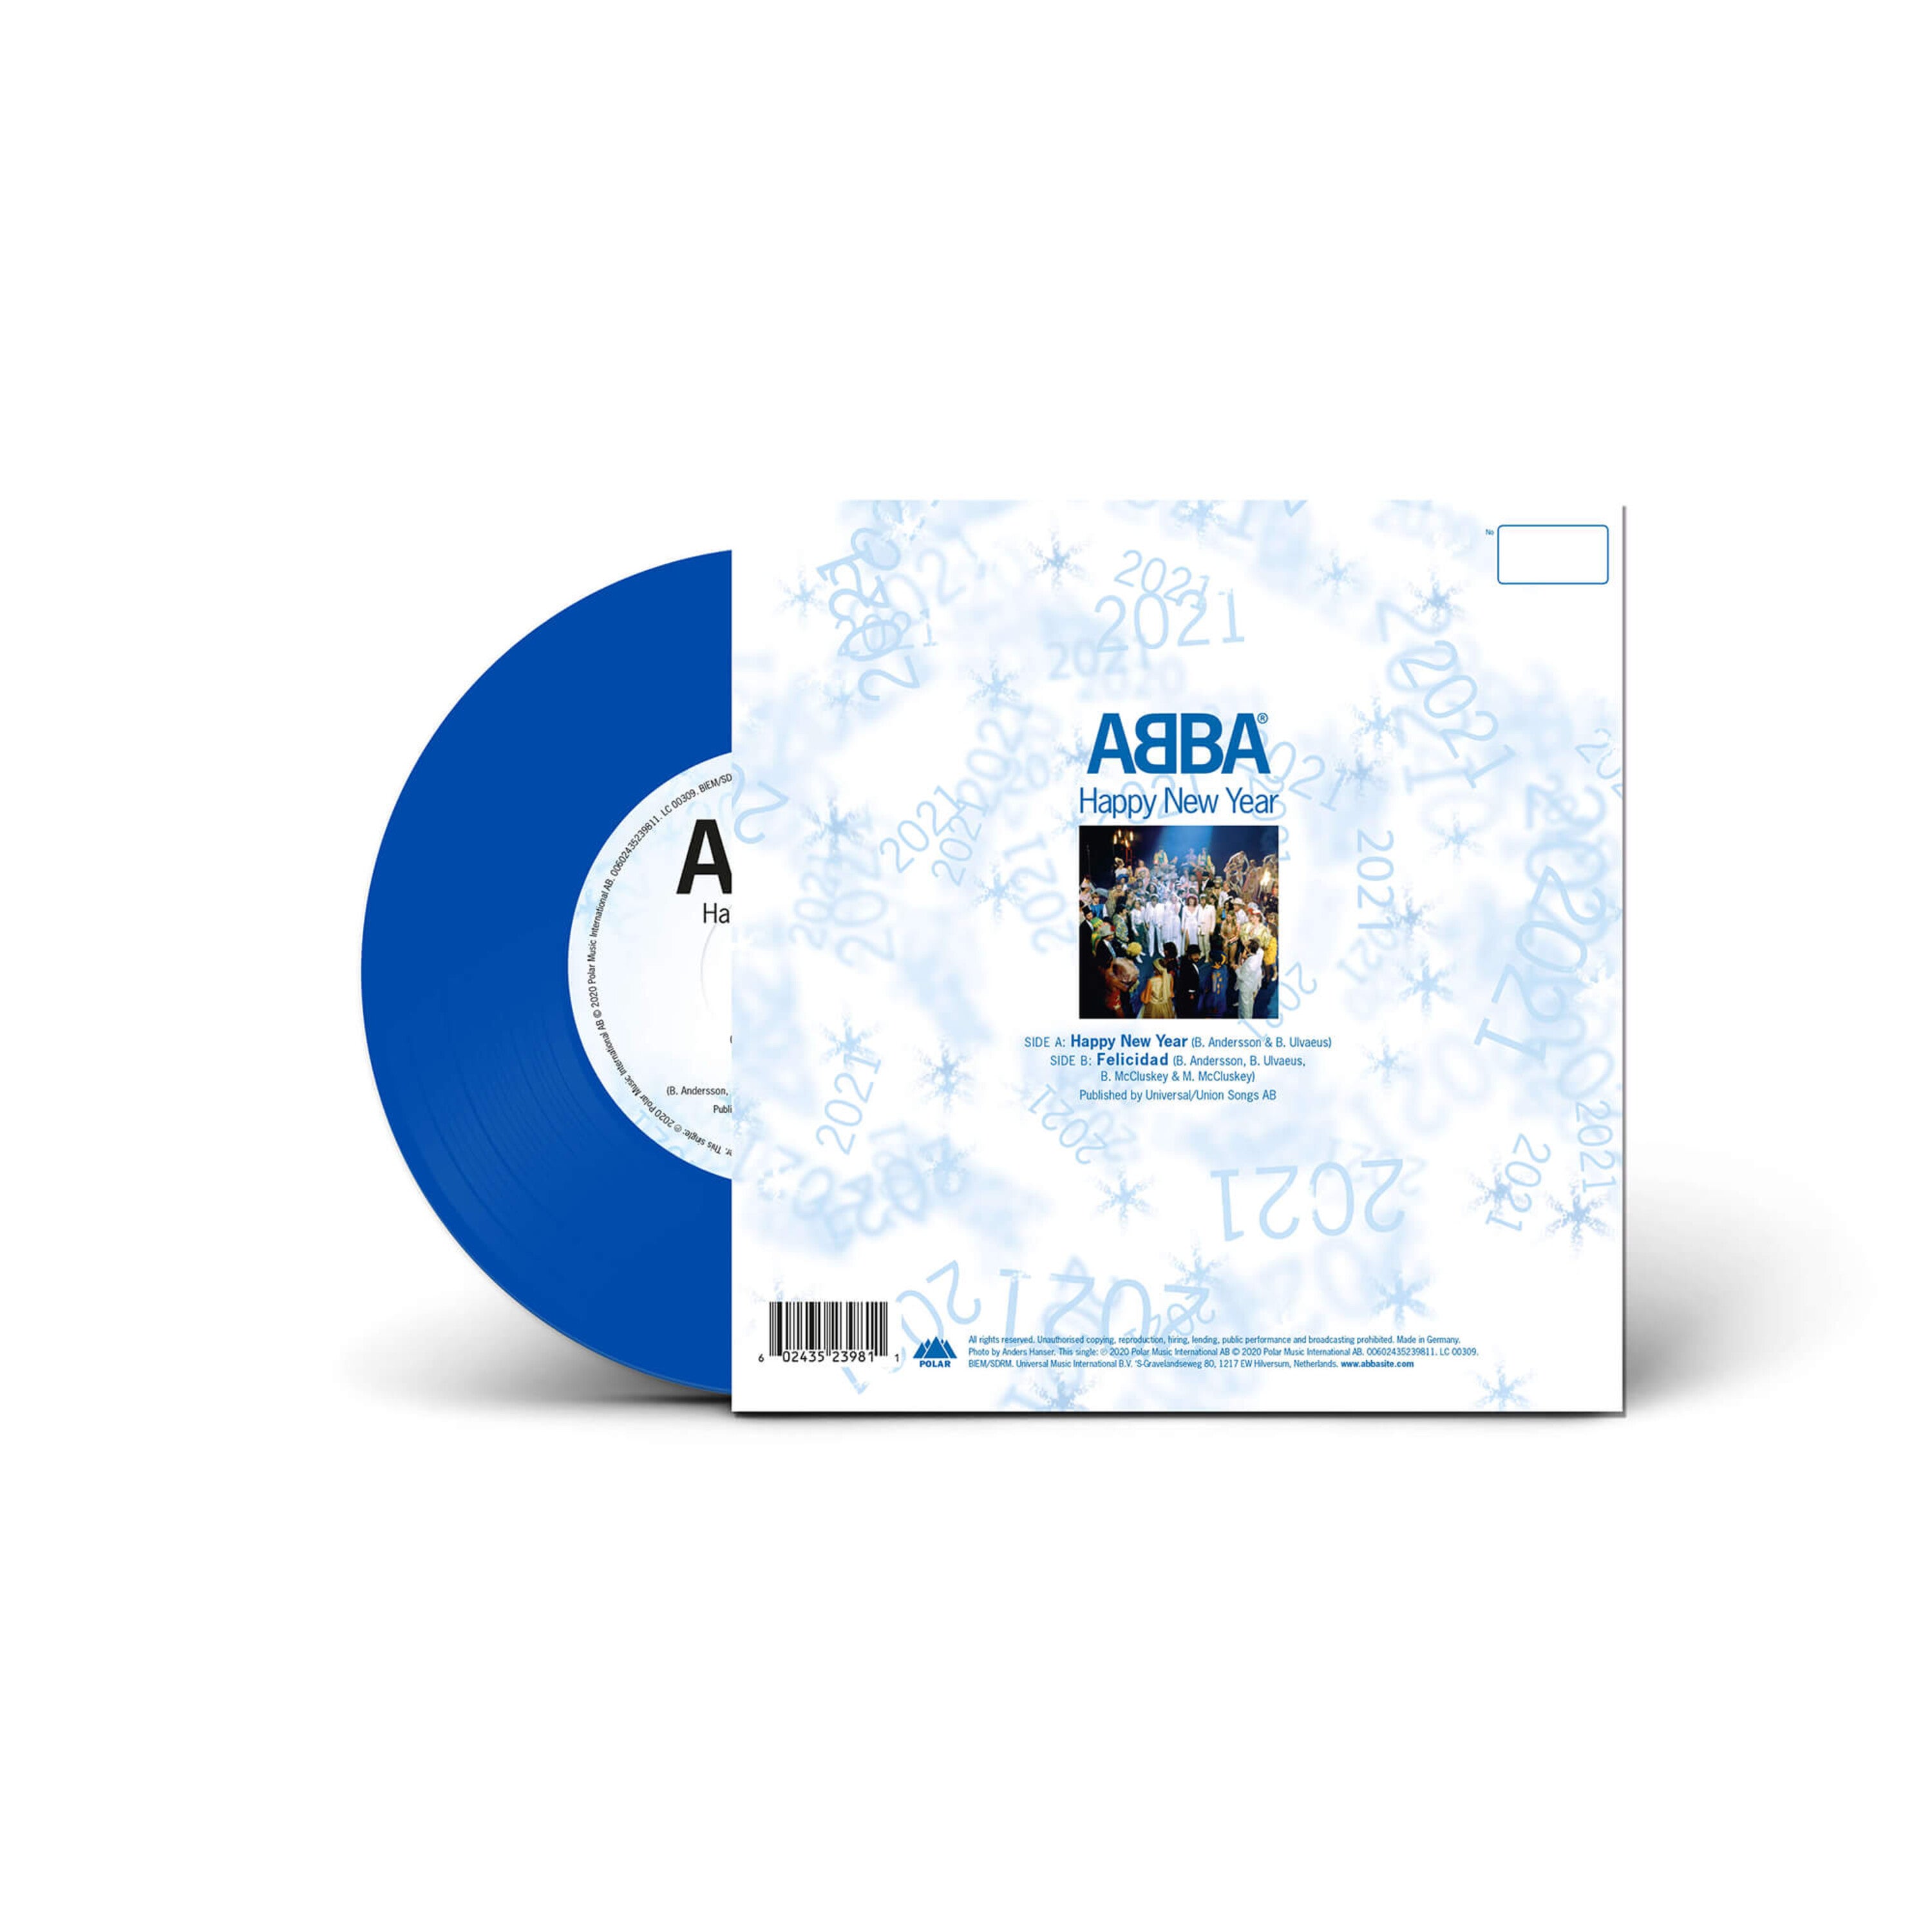 https://images.bravado.de/prod/product-assets/product-asset-data/abba/abba/products/134820/web/297757/image-thumb__297757__3000x3000_original/ABBA-Happy-New-Year-Ltd-Clear-Blue-7inch-Single-Vinyl-134820-297757.jpg